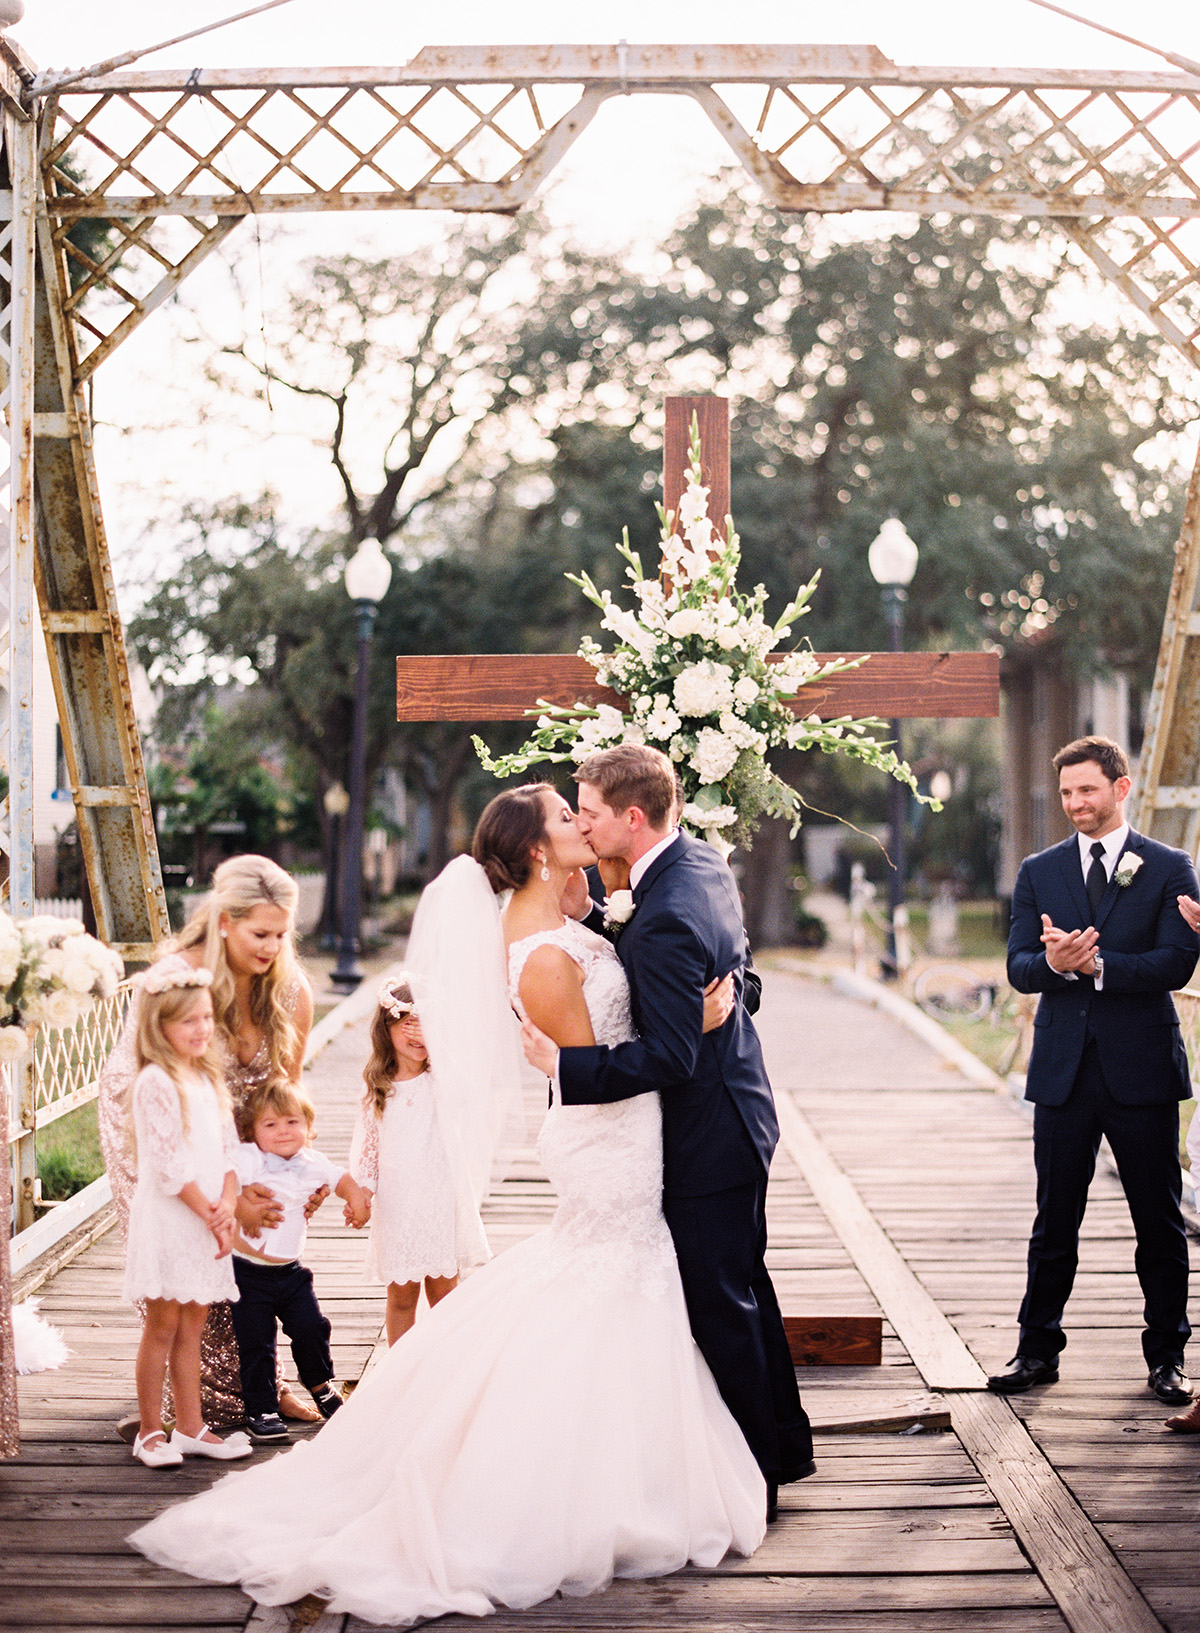 A wedding ceremony on the Bayou St. John bridge in New Orleans. Photo: Mon Soleil